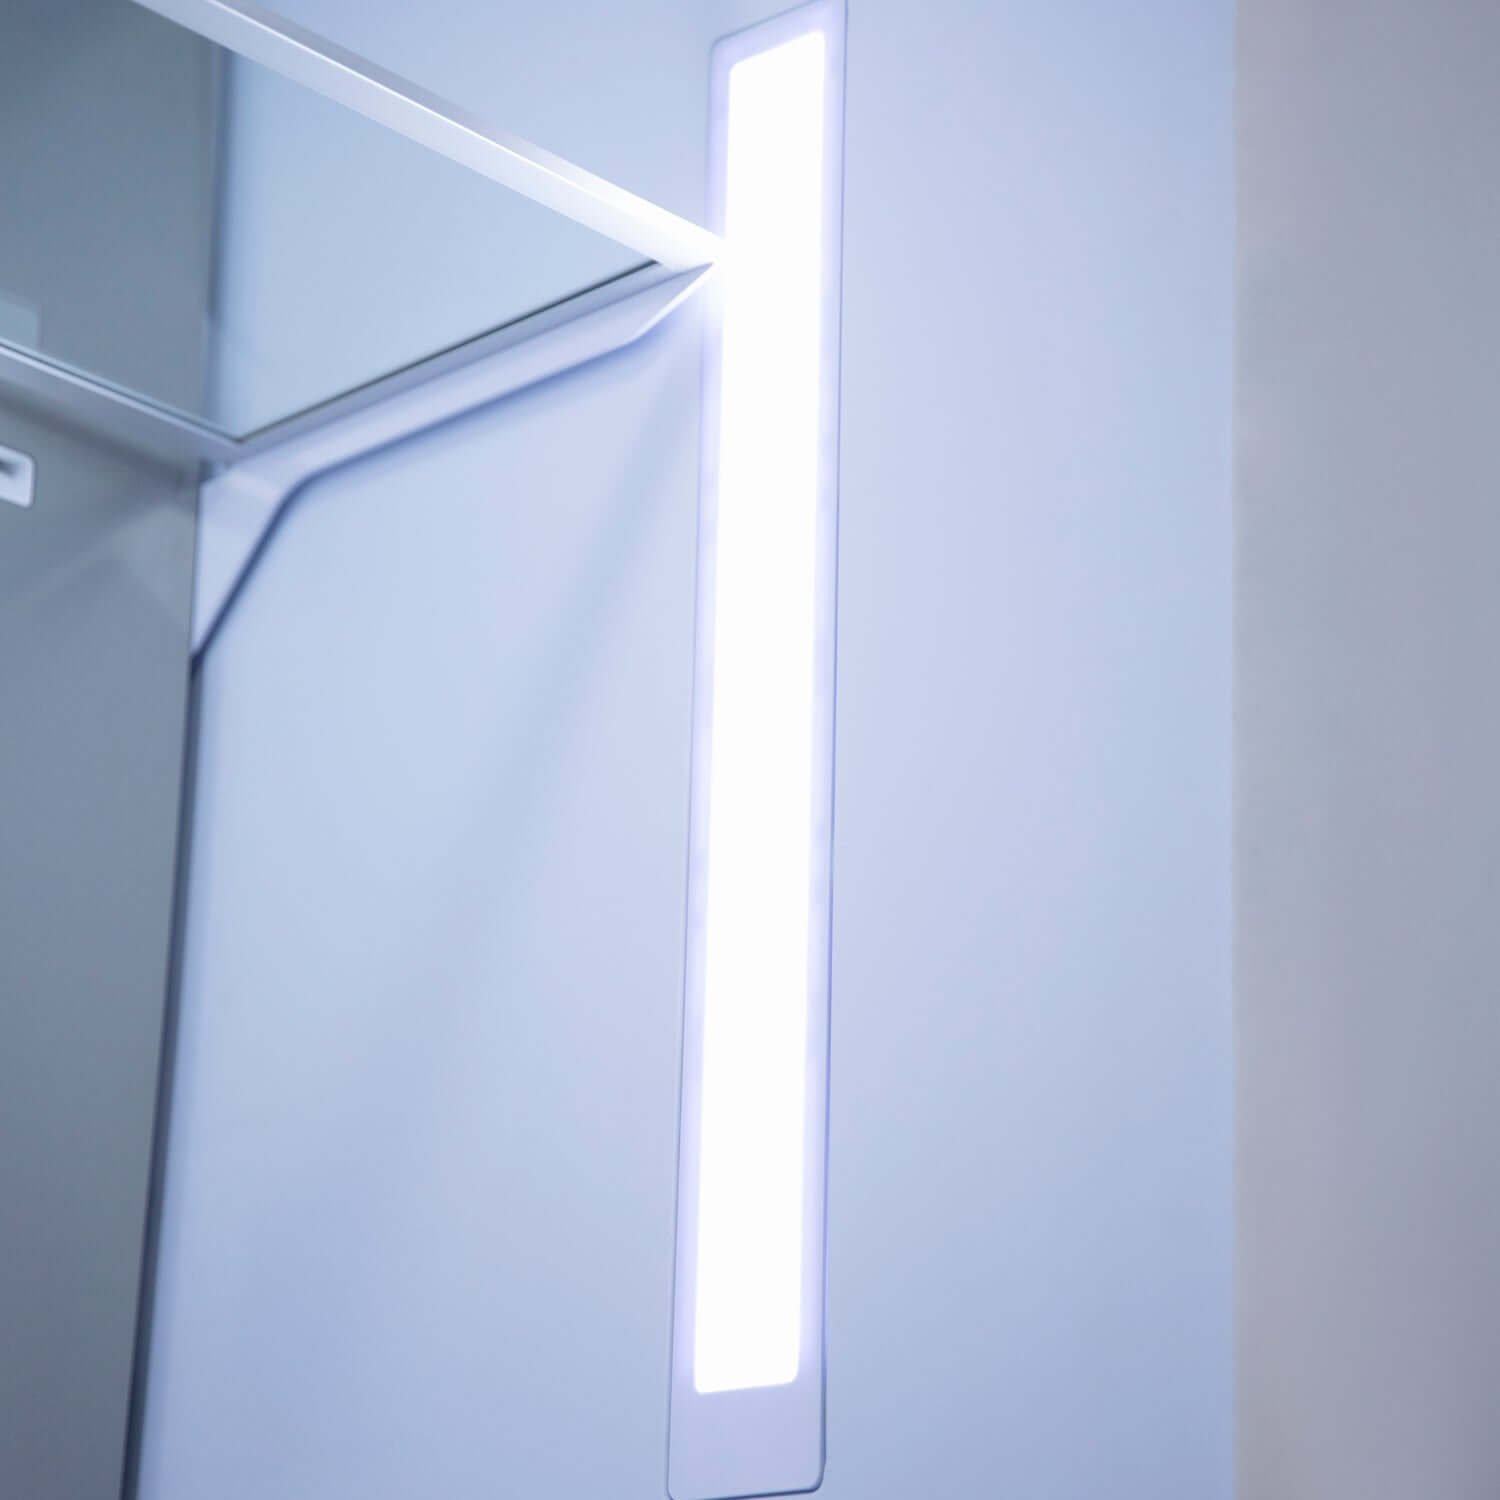 Built-in LED Lighting Illuminates Refrigerator and Freezer Spaces.